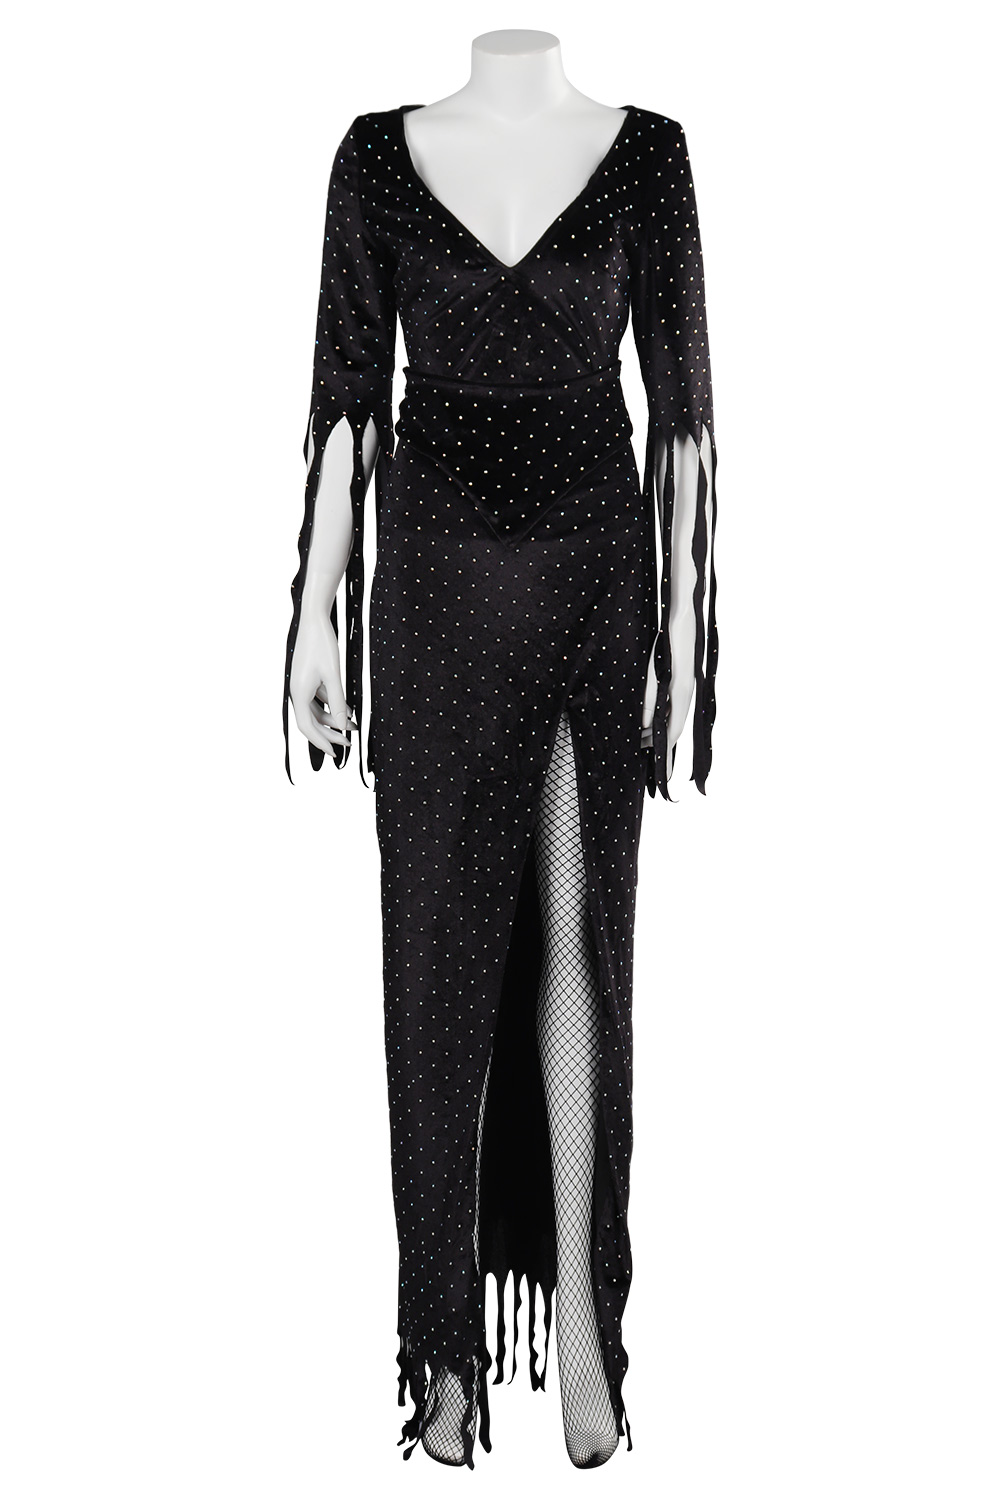 TV The Vampira Show Vampira Women Black Slim Dress Outfits Halloween Carnival Suit Cosplay Costume